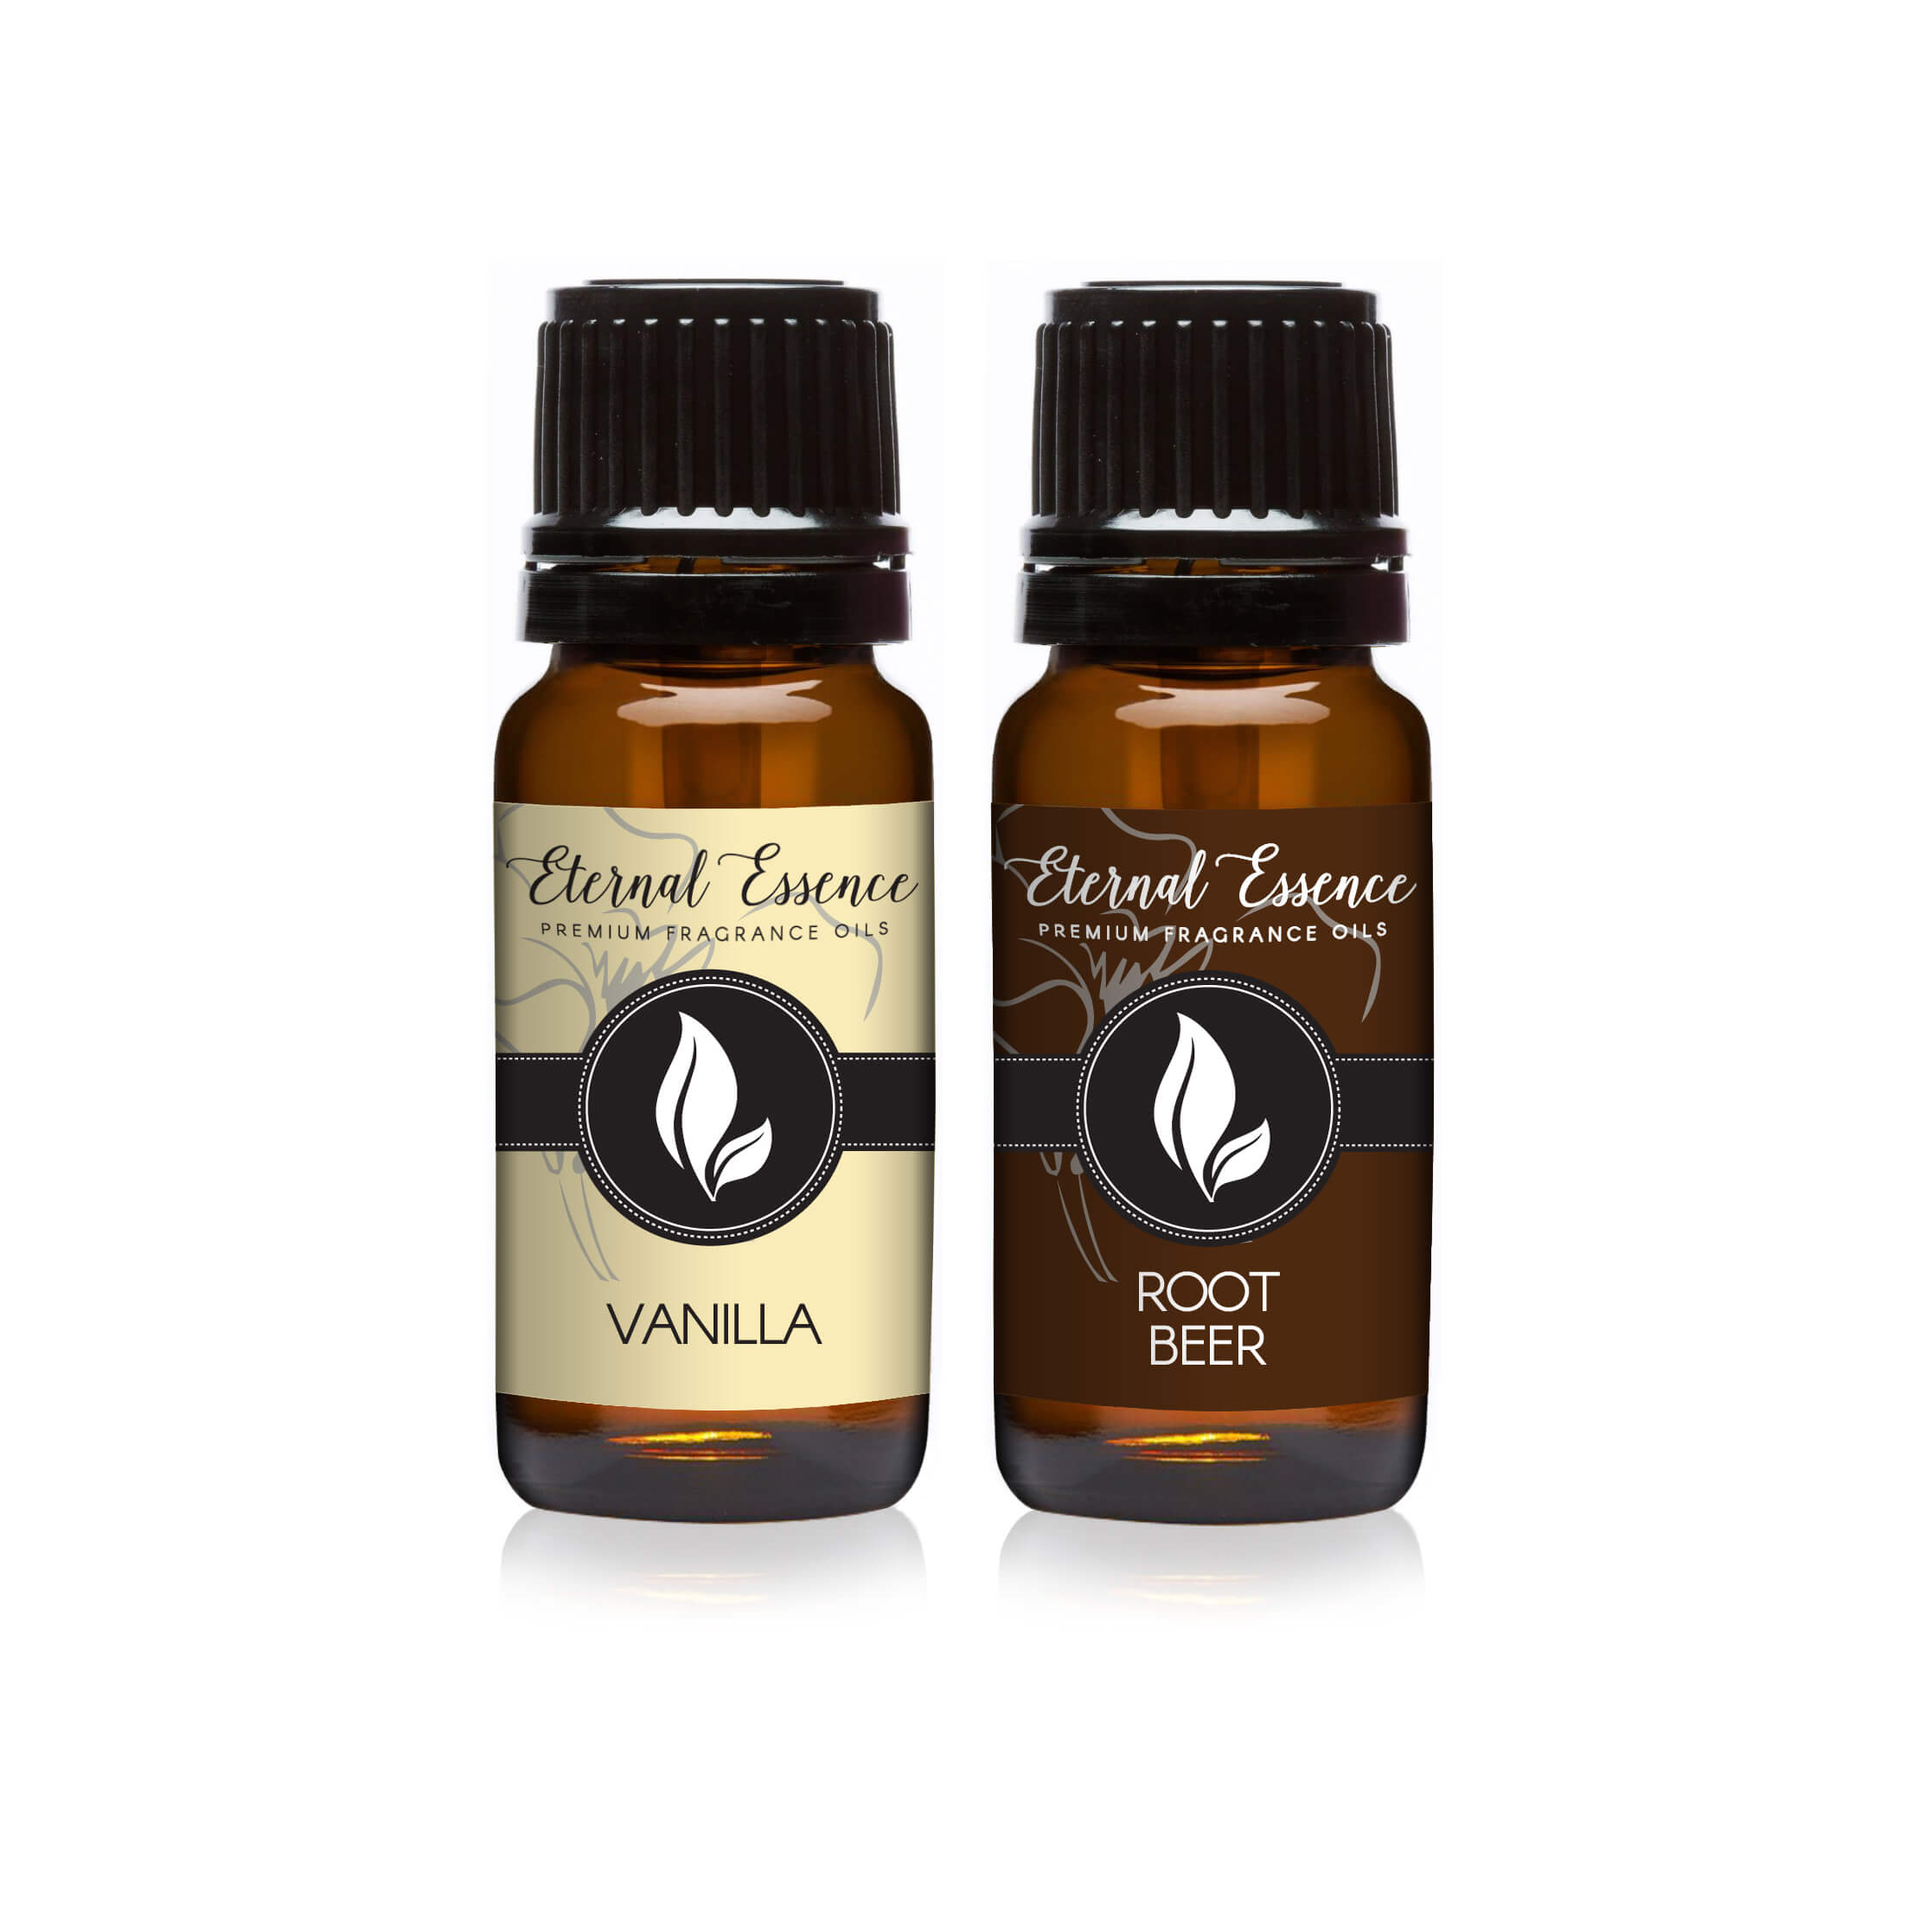 Pair (2) - Vanilla & Root Beer - Premium Fragrance Oil Pair - 10ML